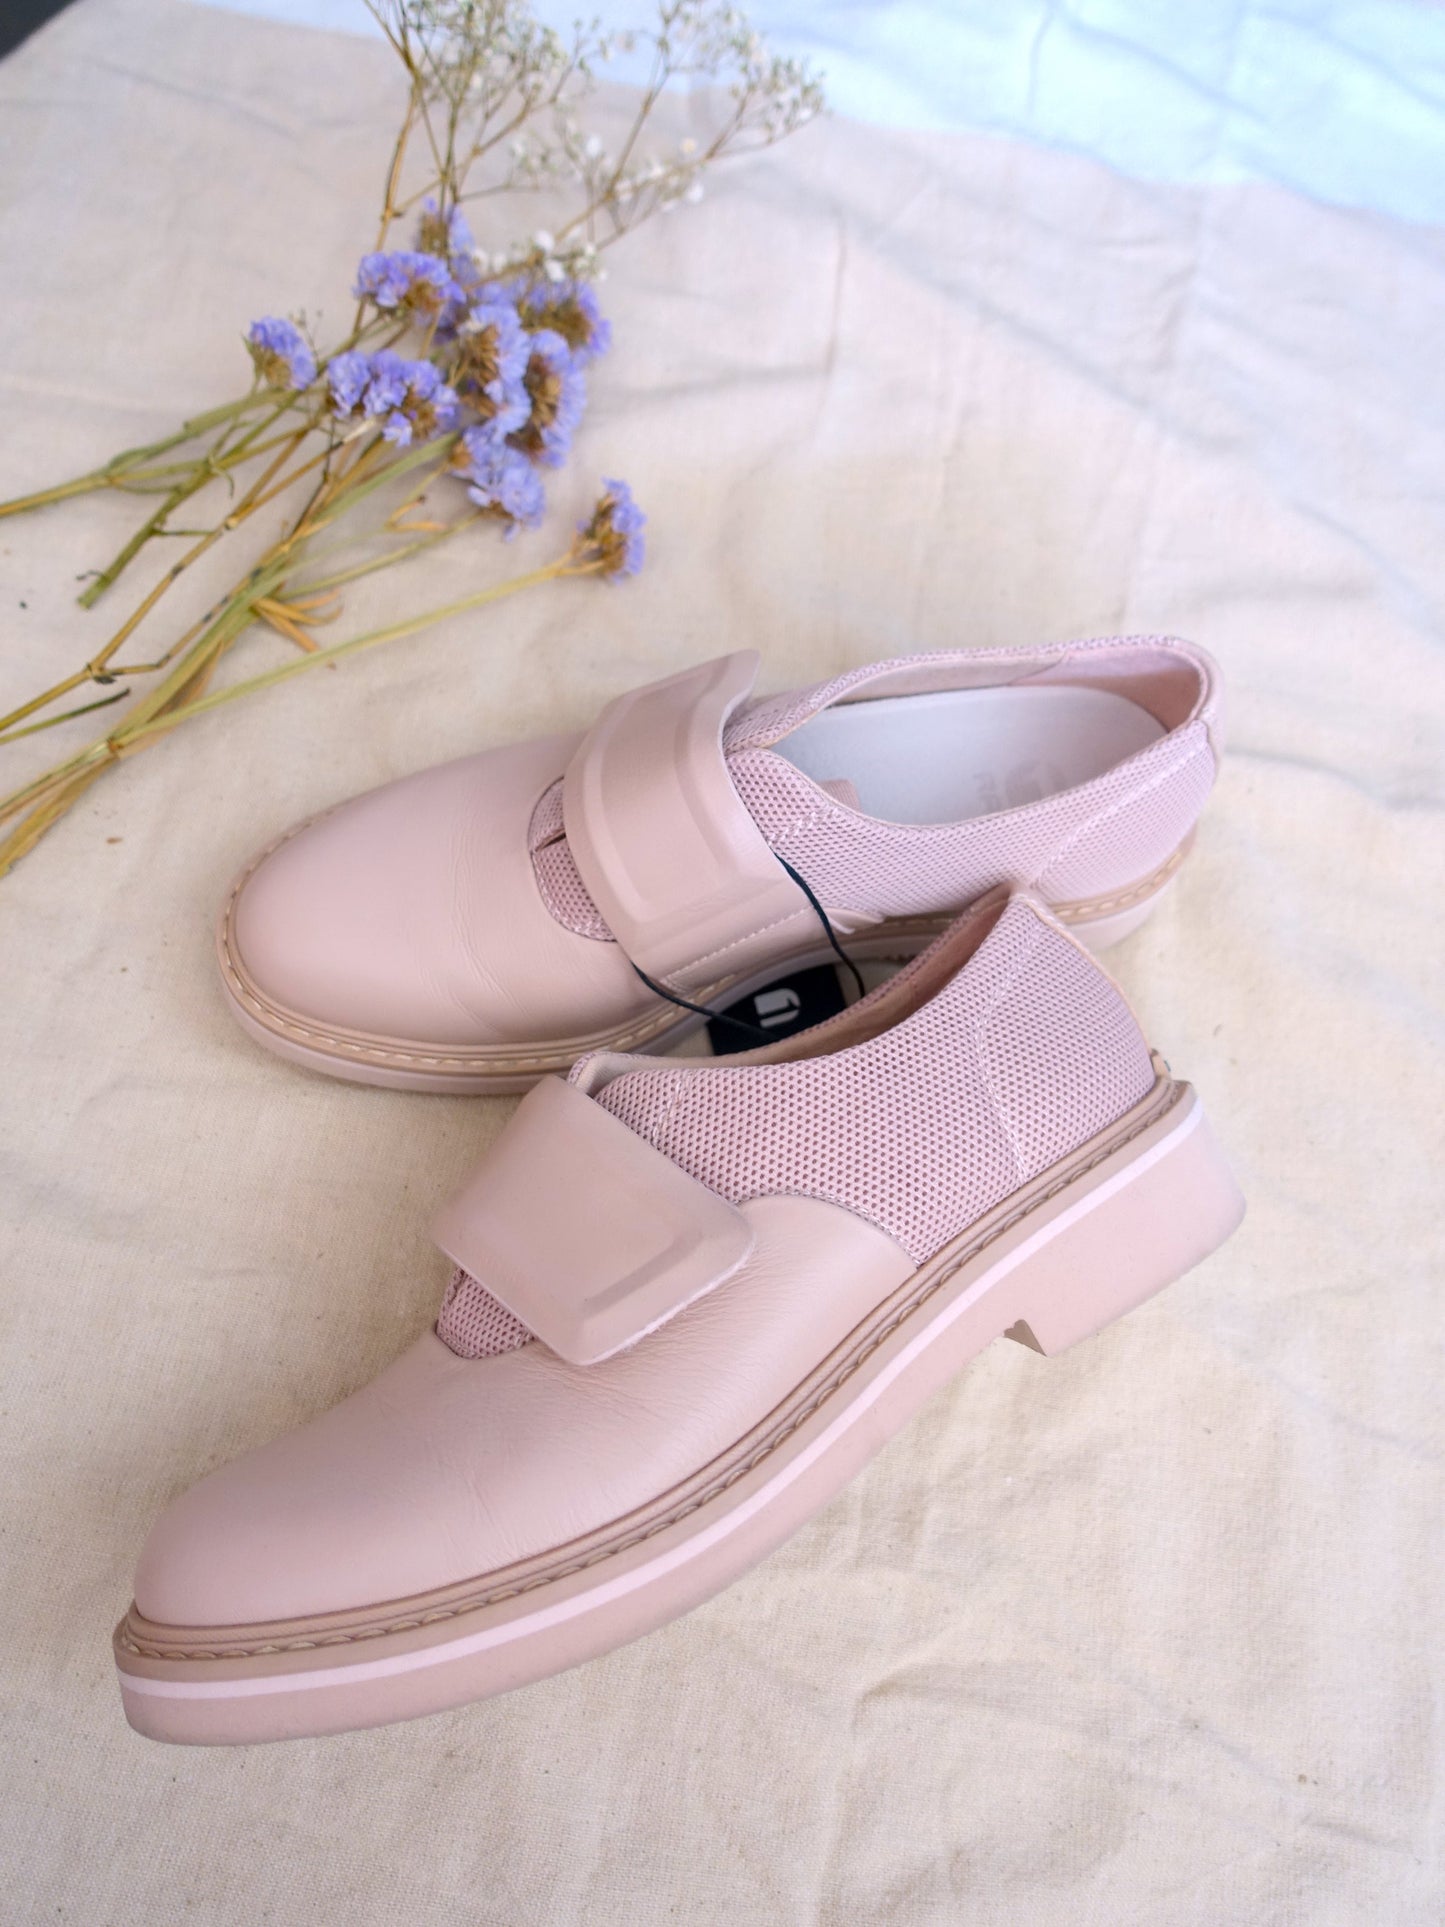 G-star raw core strap mesh leather schoenen powder pink